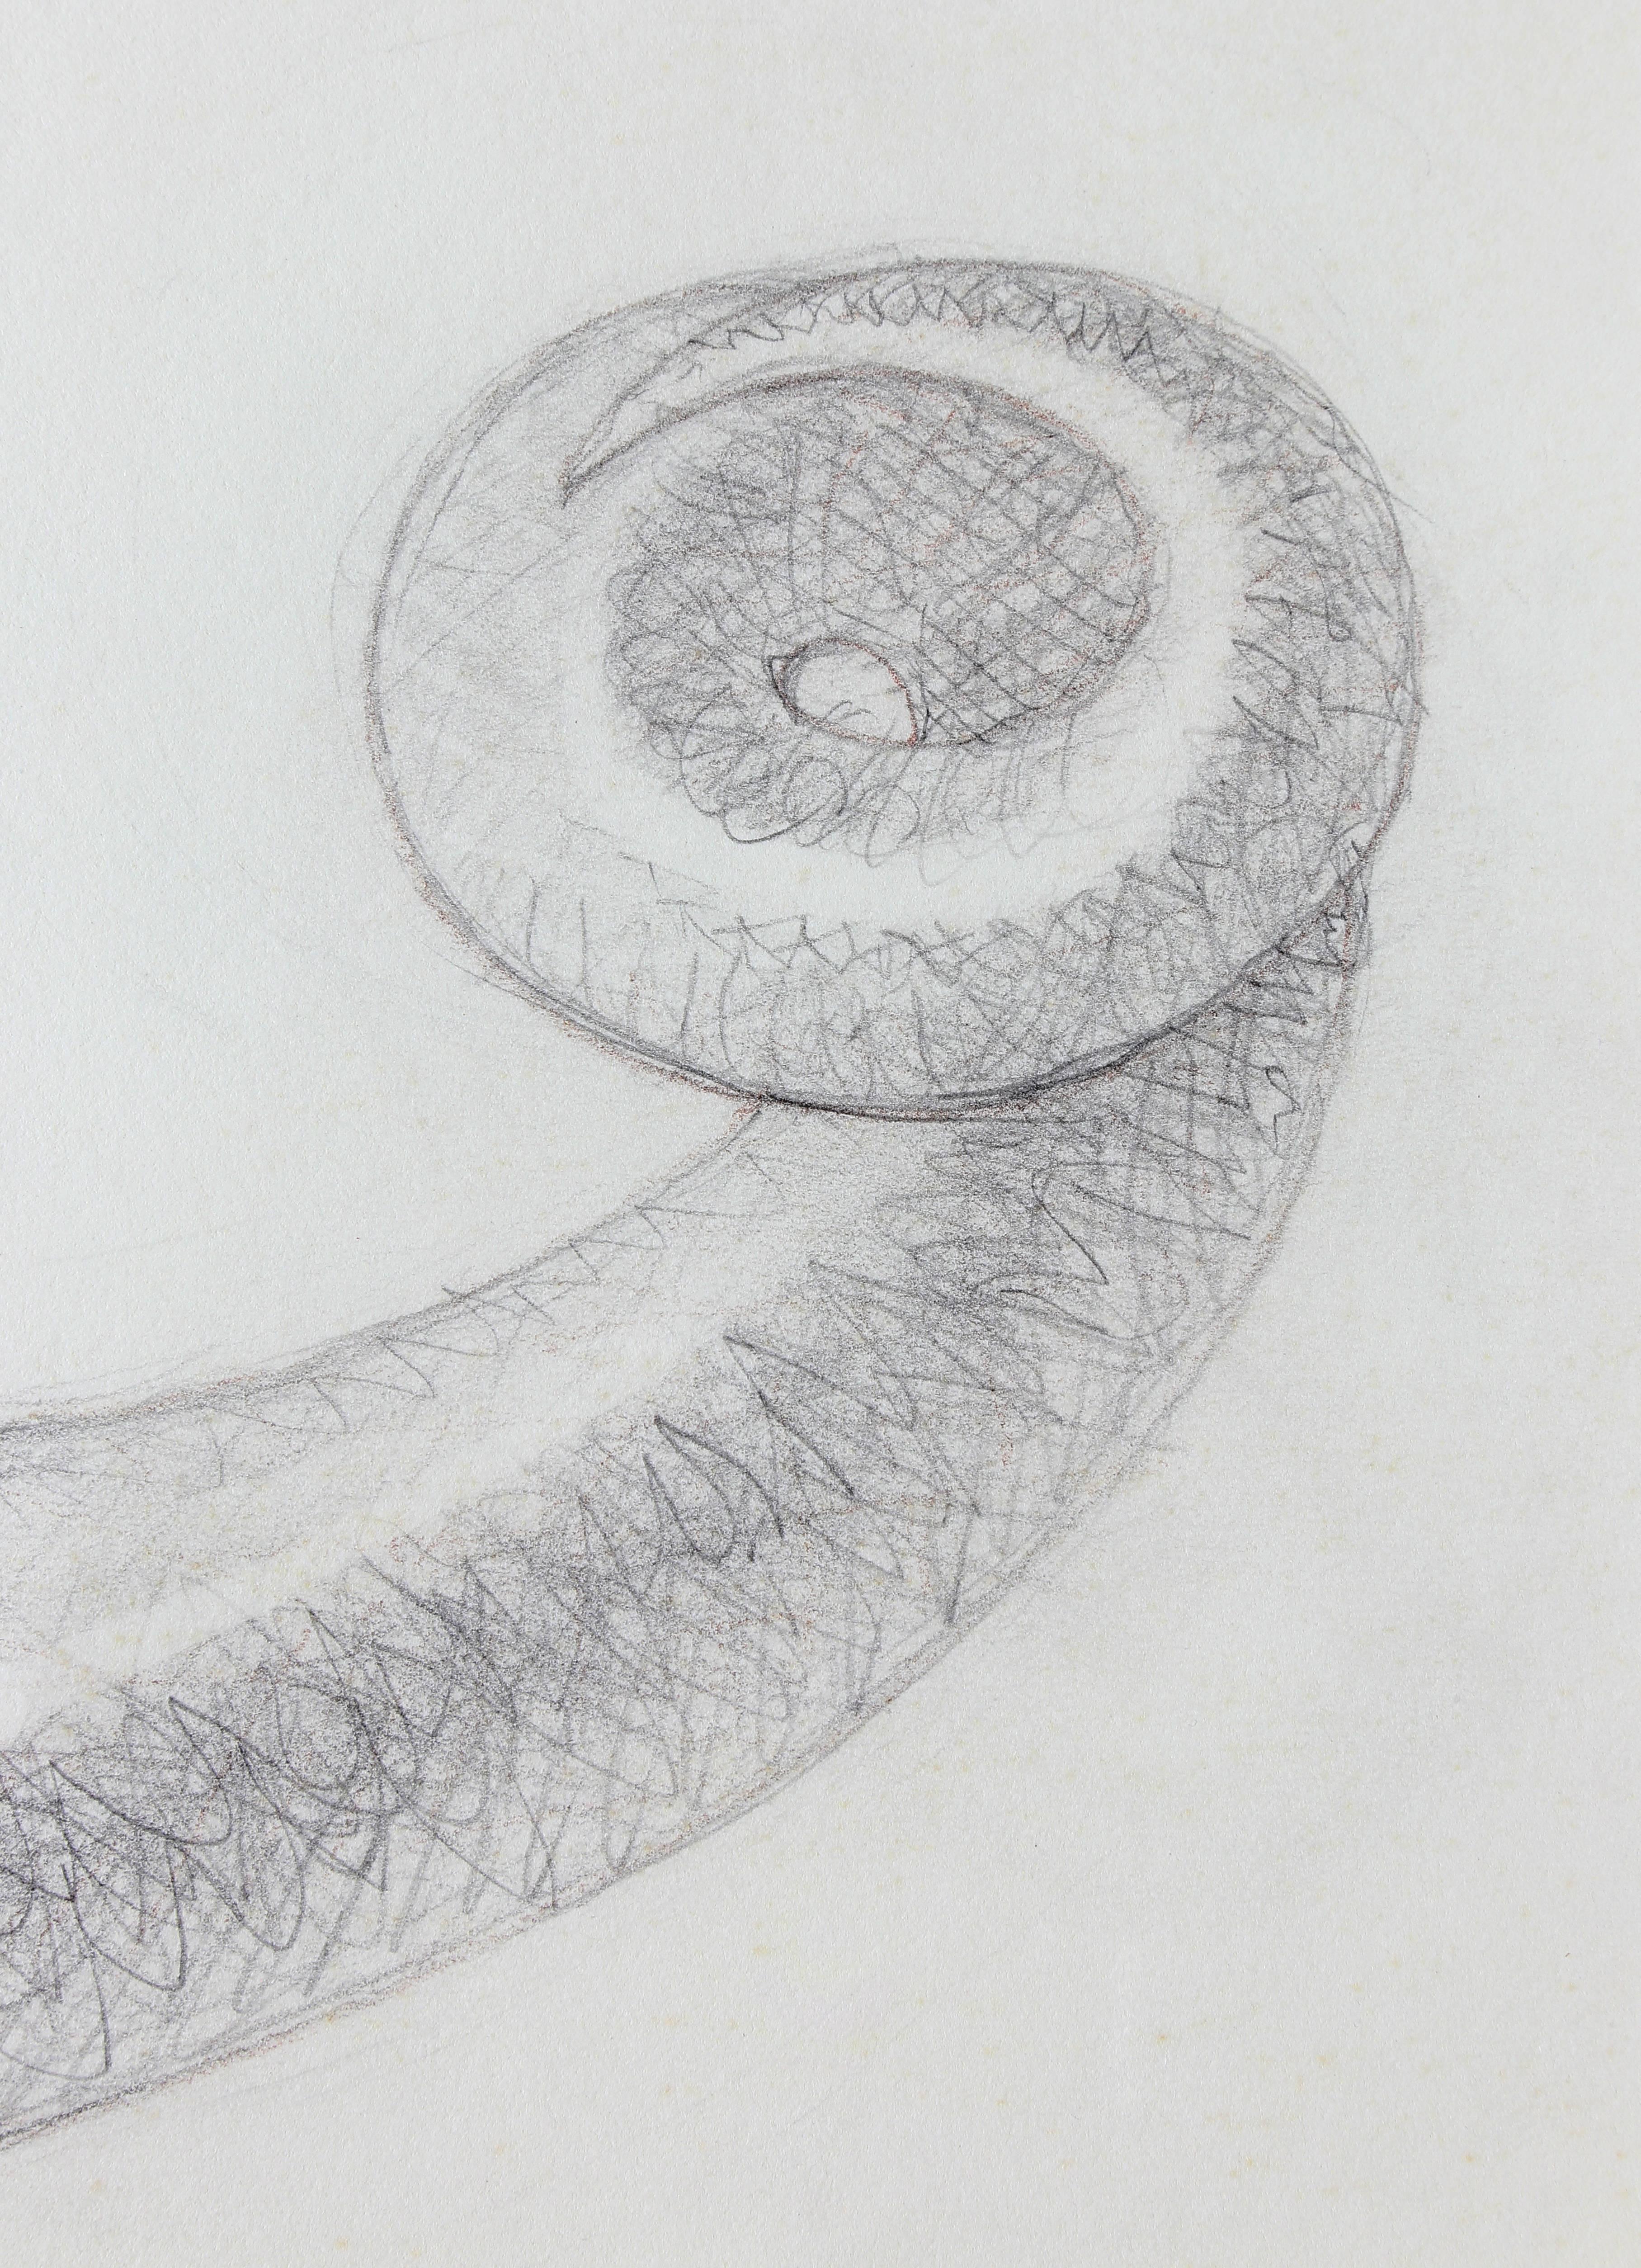 American Framed Original Pencil Drawing of an Iguana